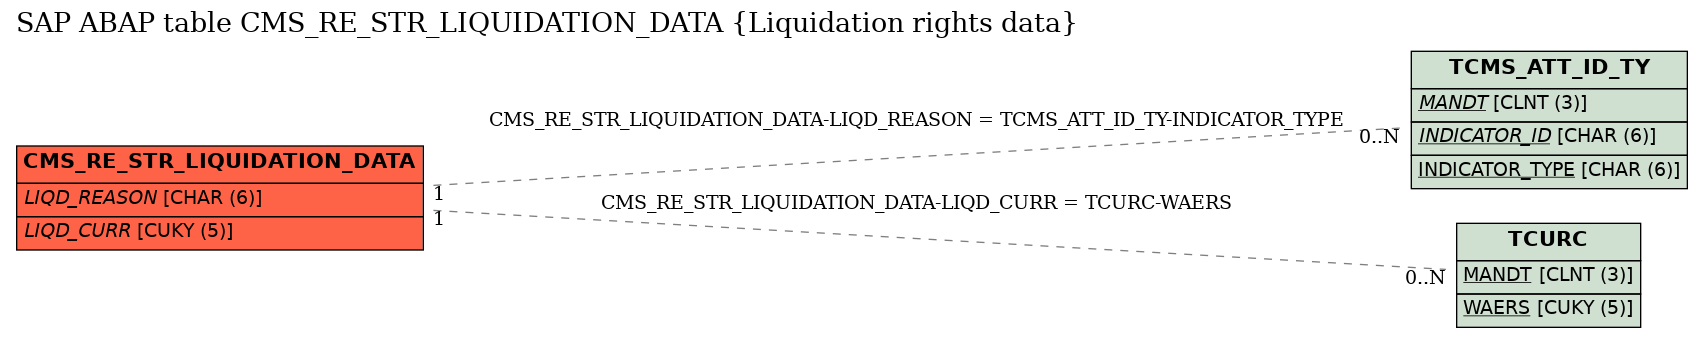 E-R Diagram for table CMS_RE_STR_LIQUIDATION_DATA (Liquidation rights data)